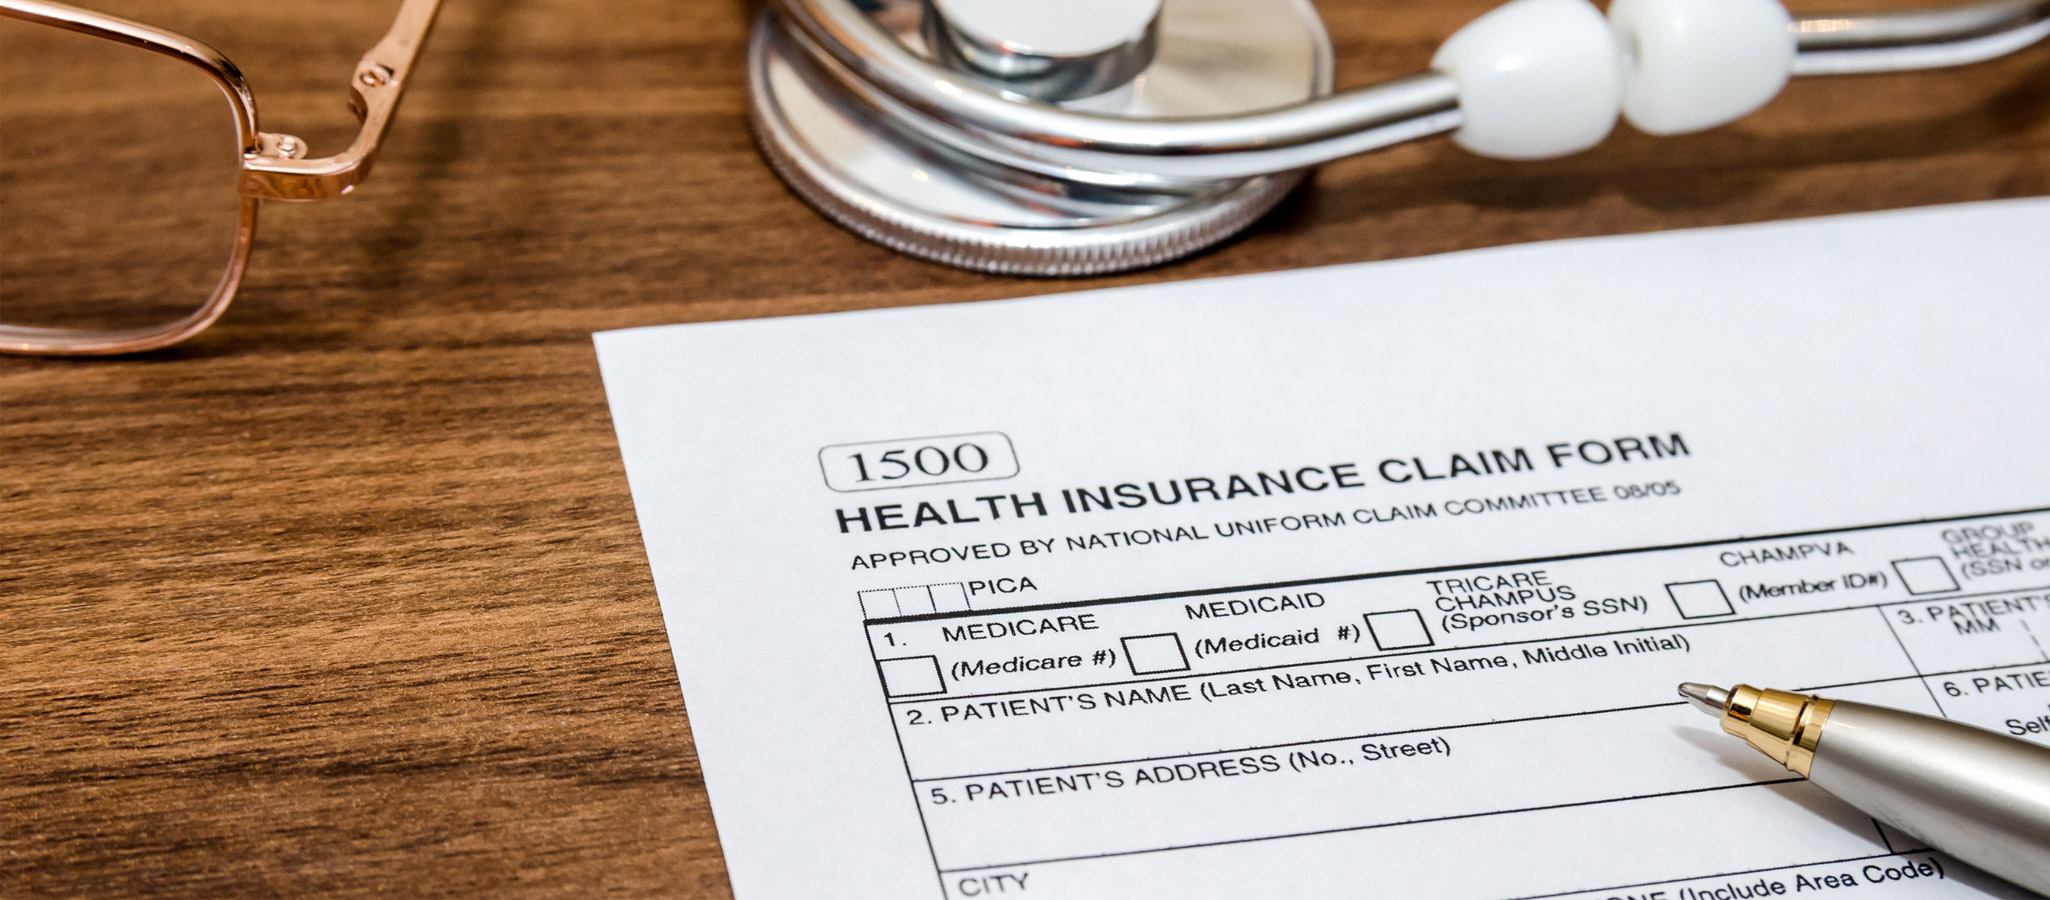 Health-insurance-claim-form